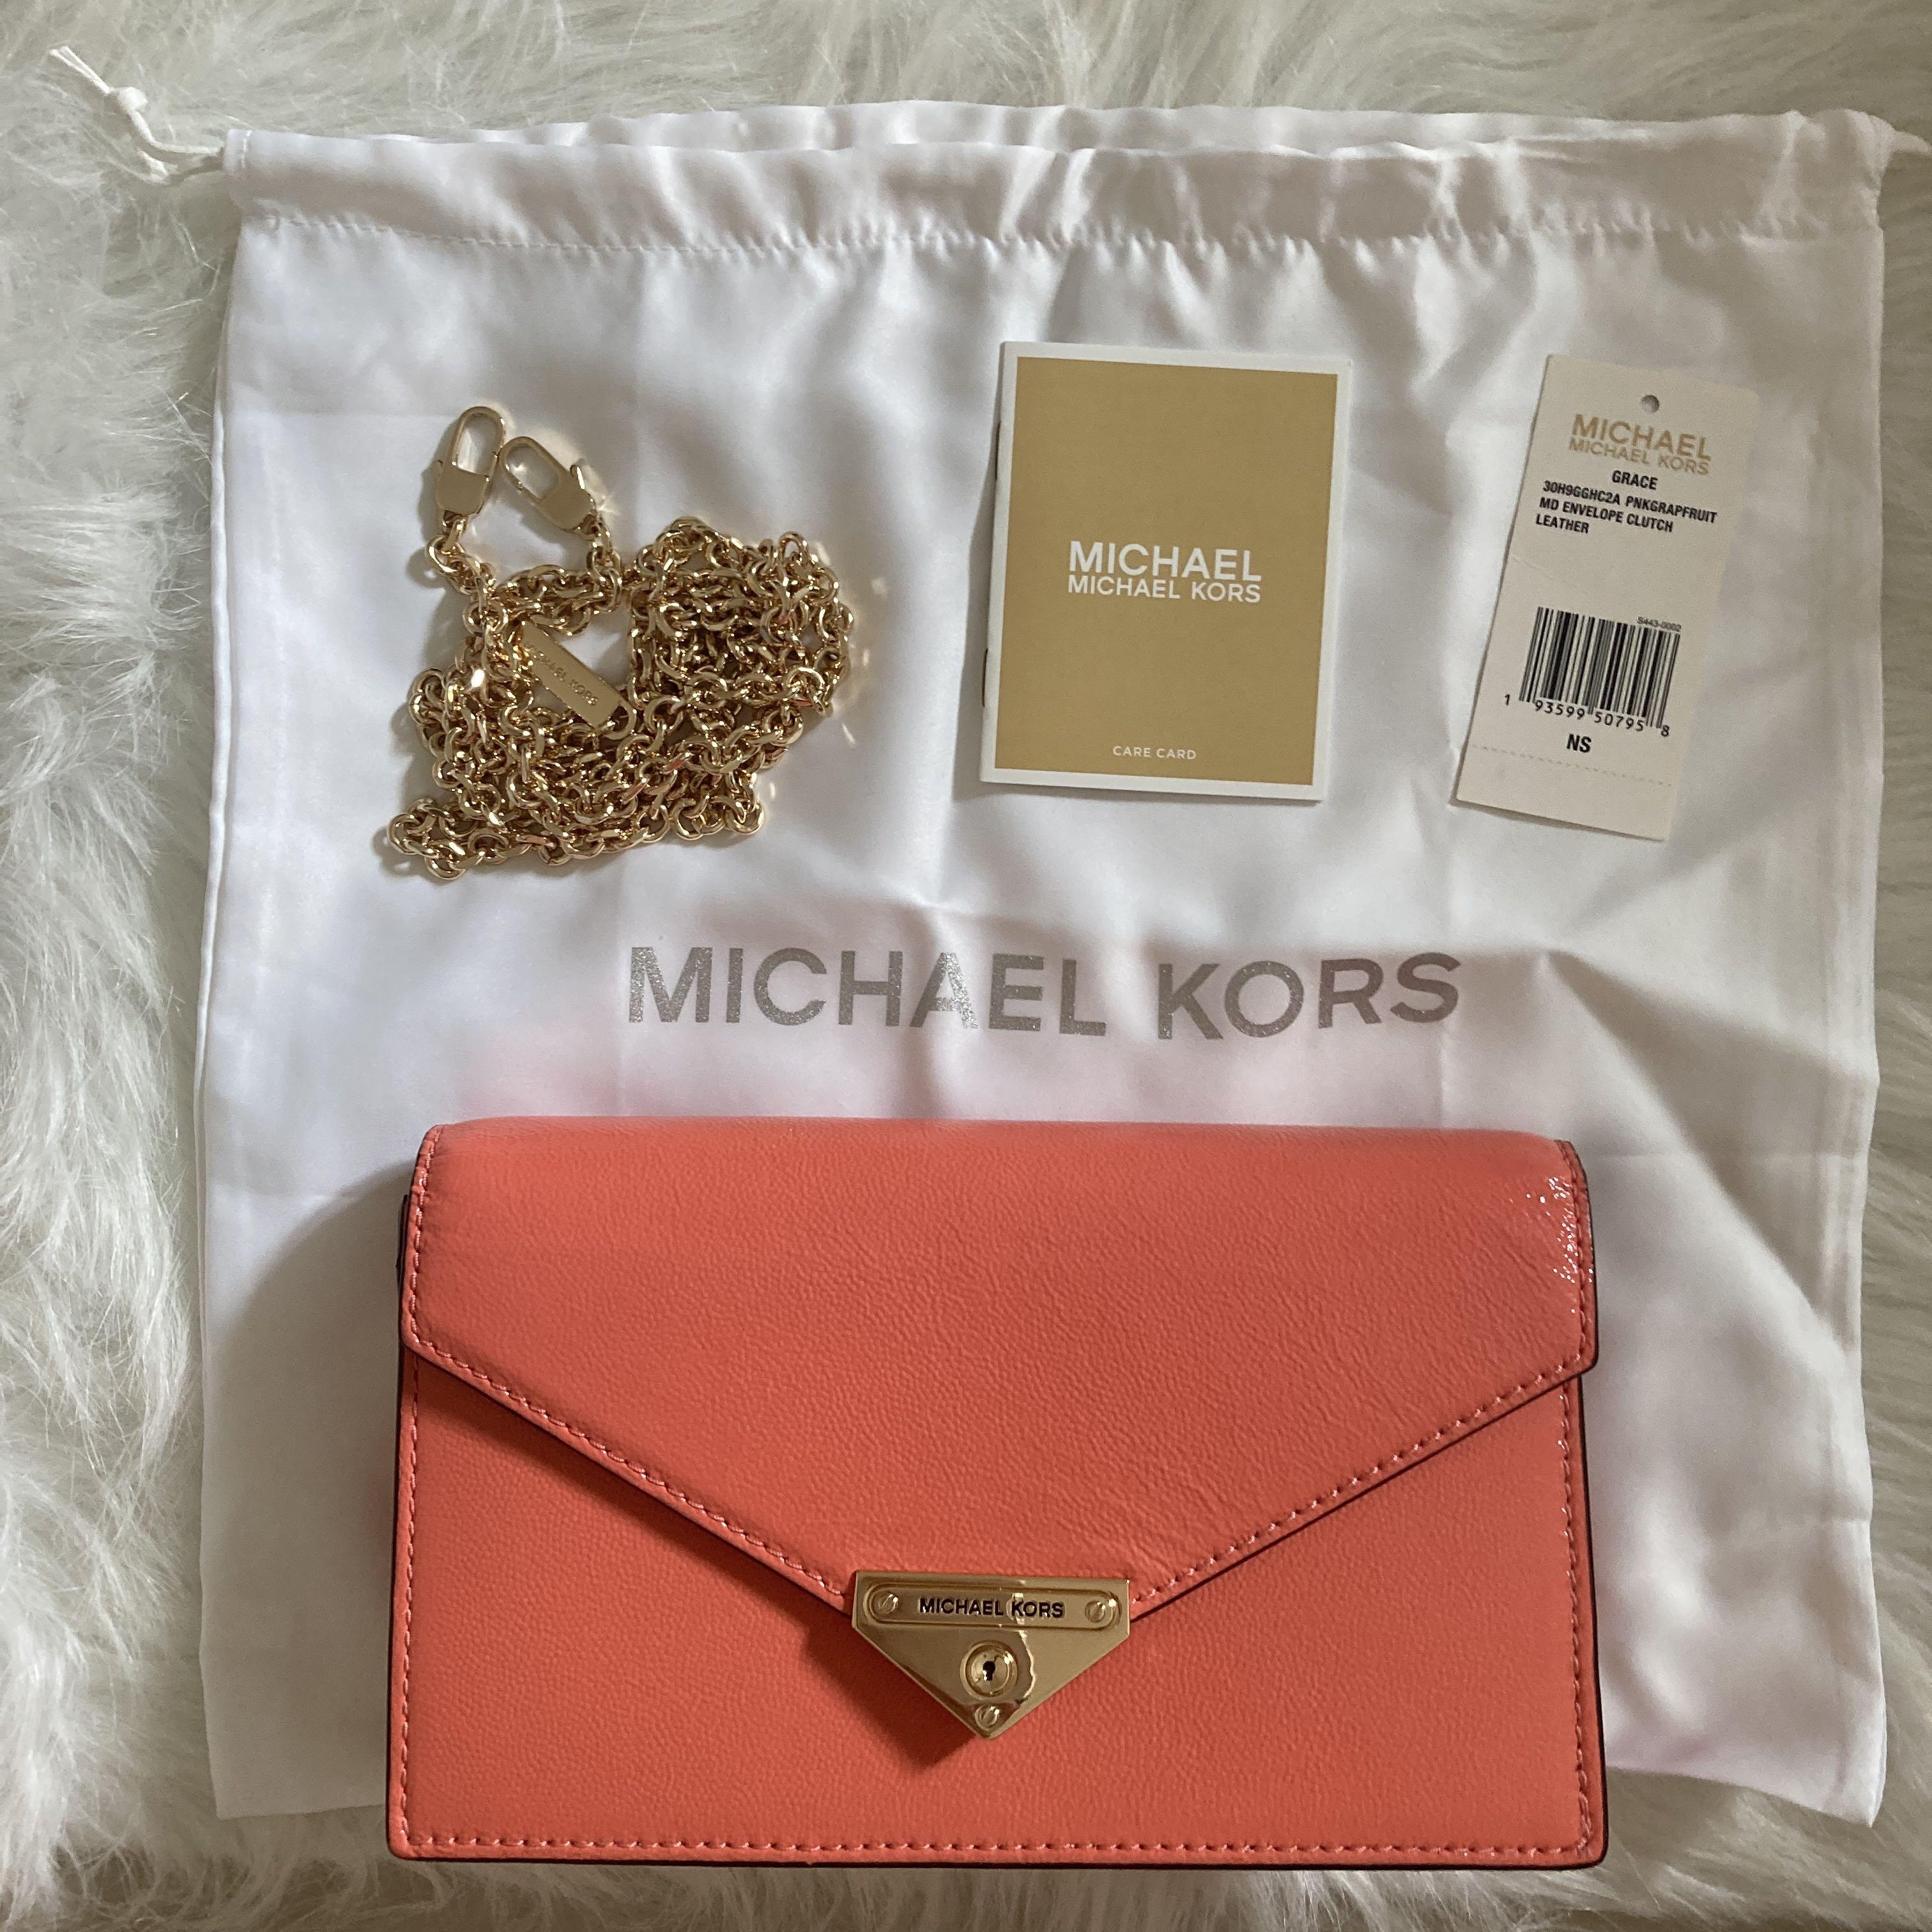 Michael Michael Kors Grace Envelope Clutch Shell Pink